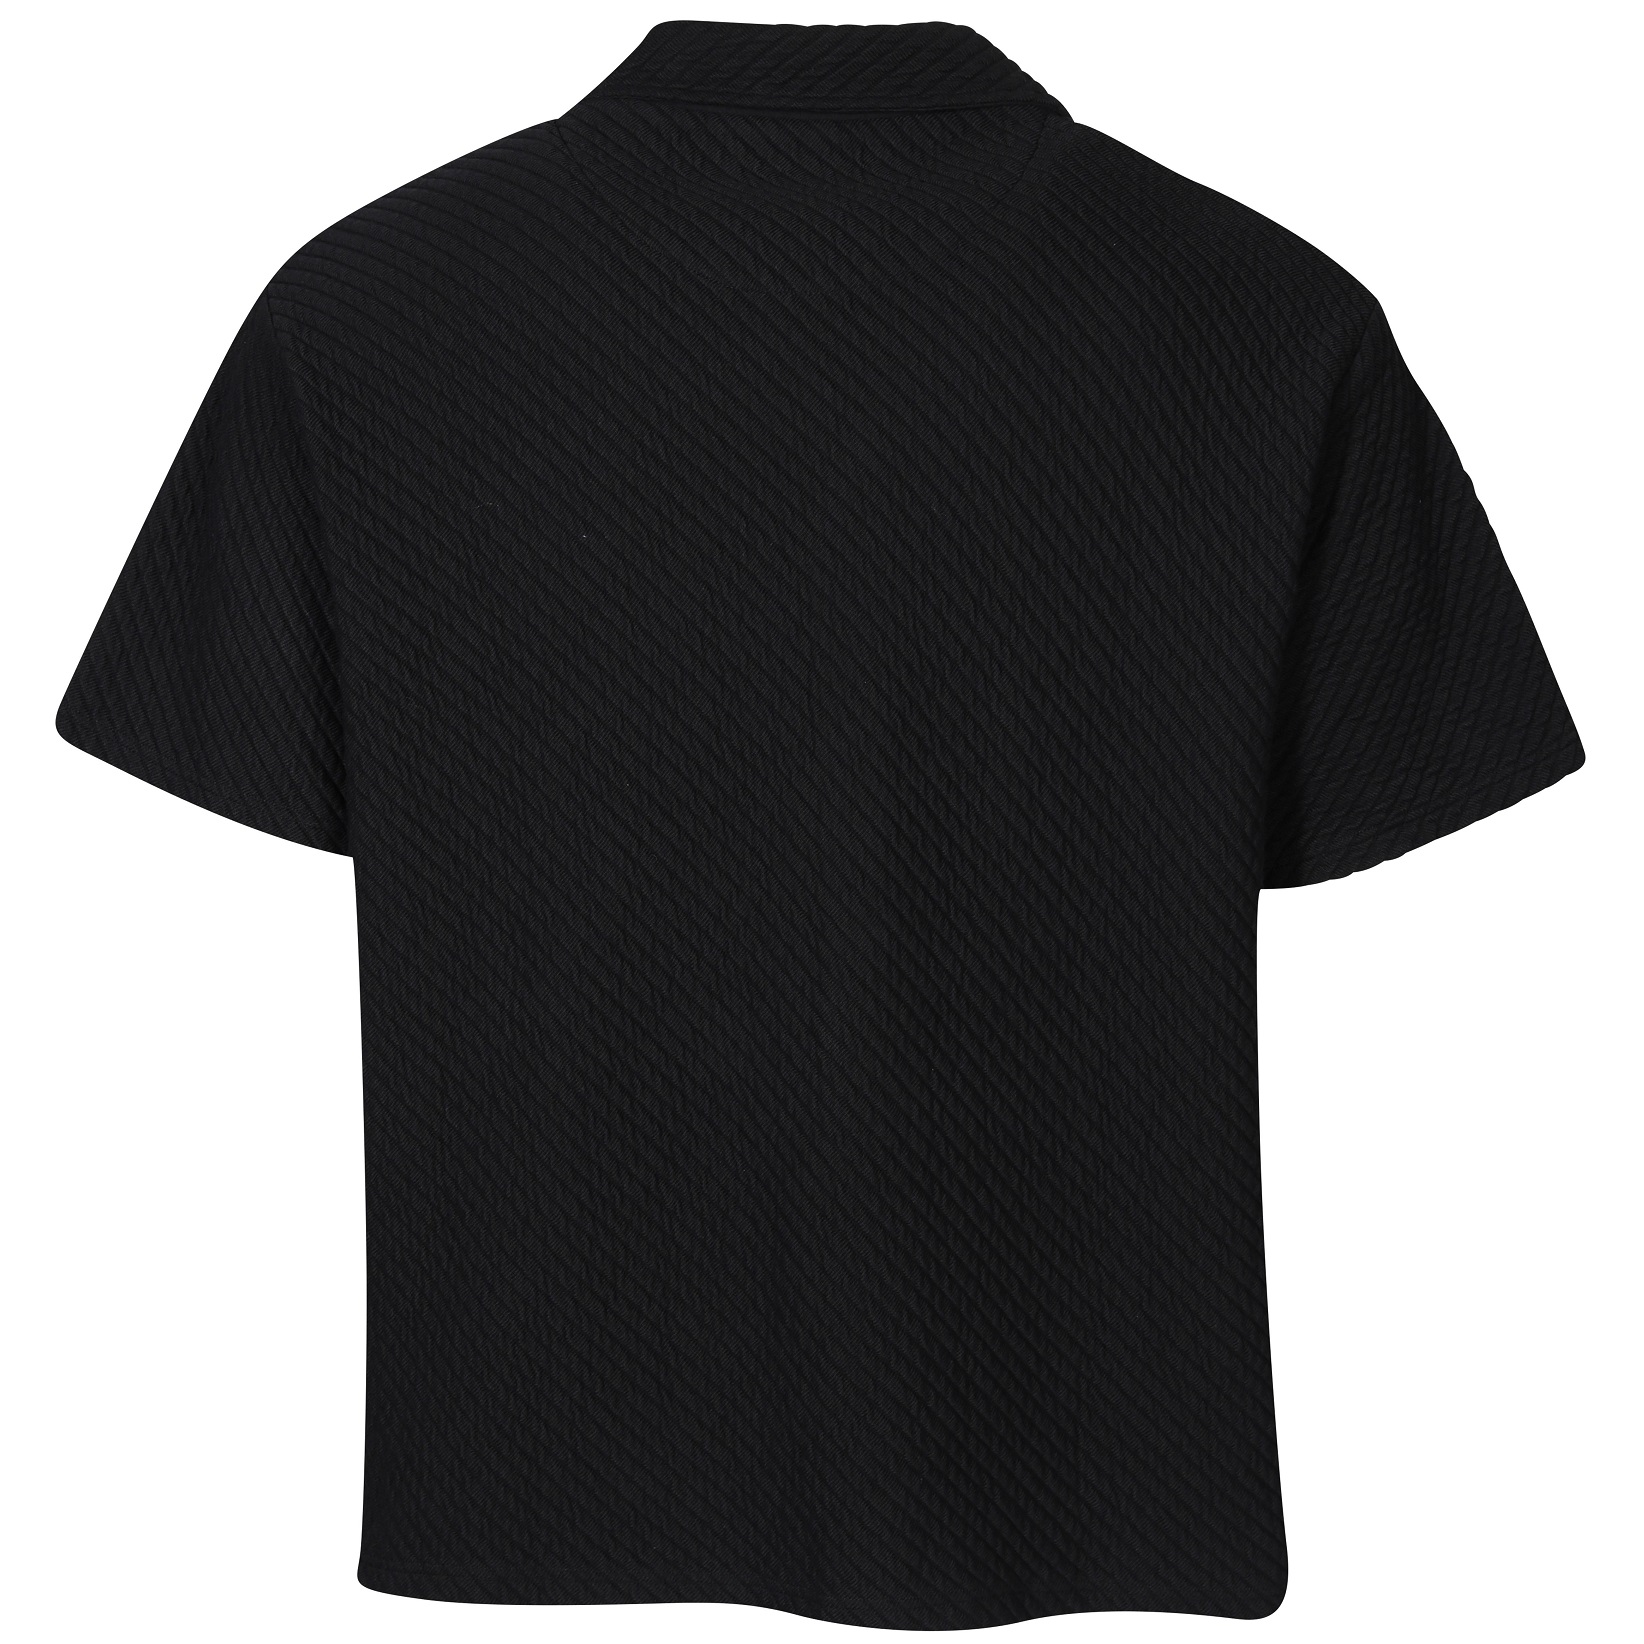 REPRESENT Ottoman Rib Shirt in Black S